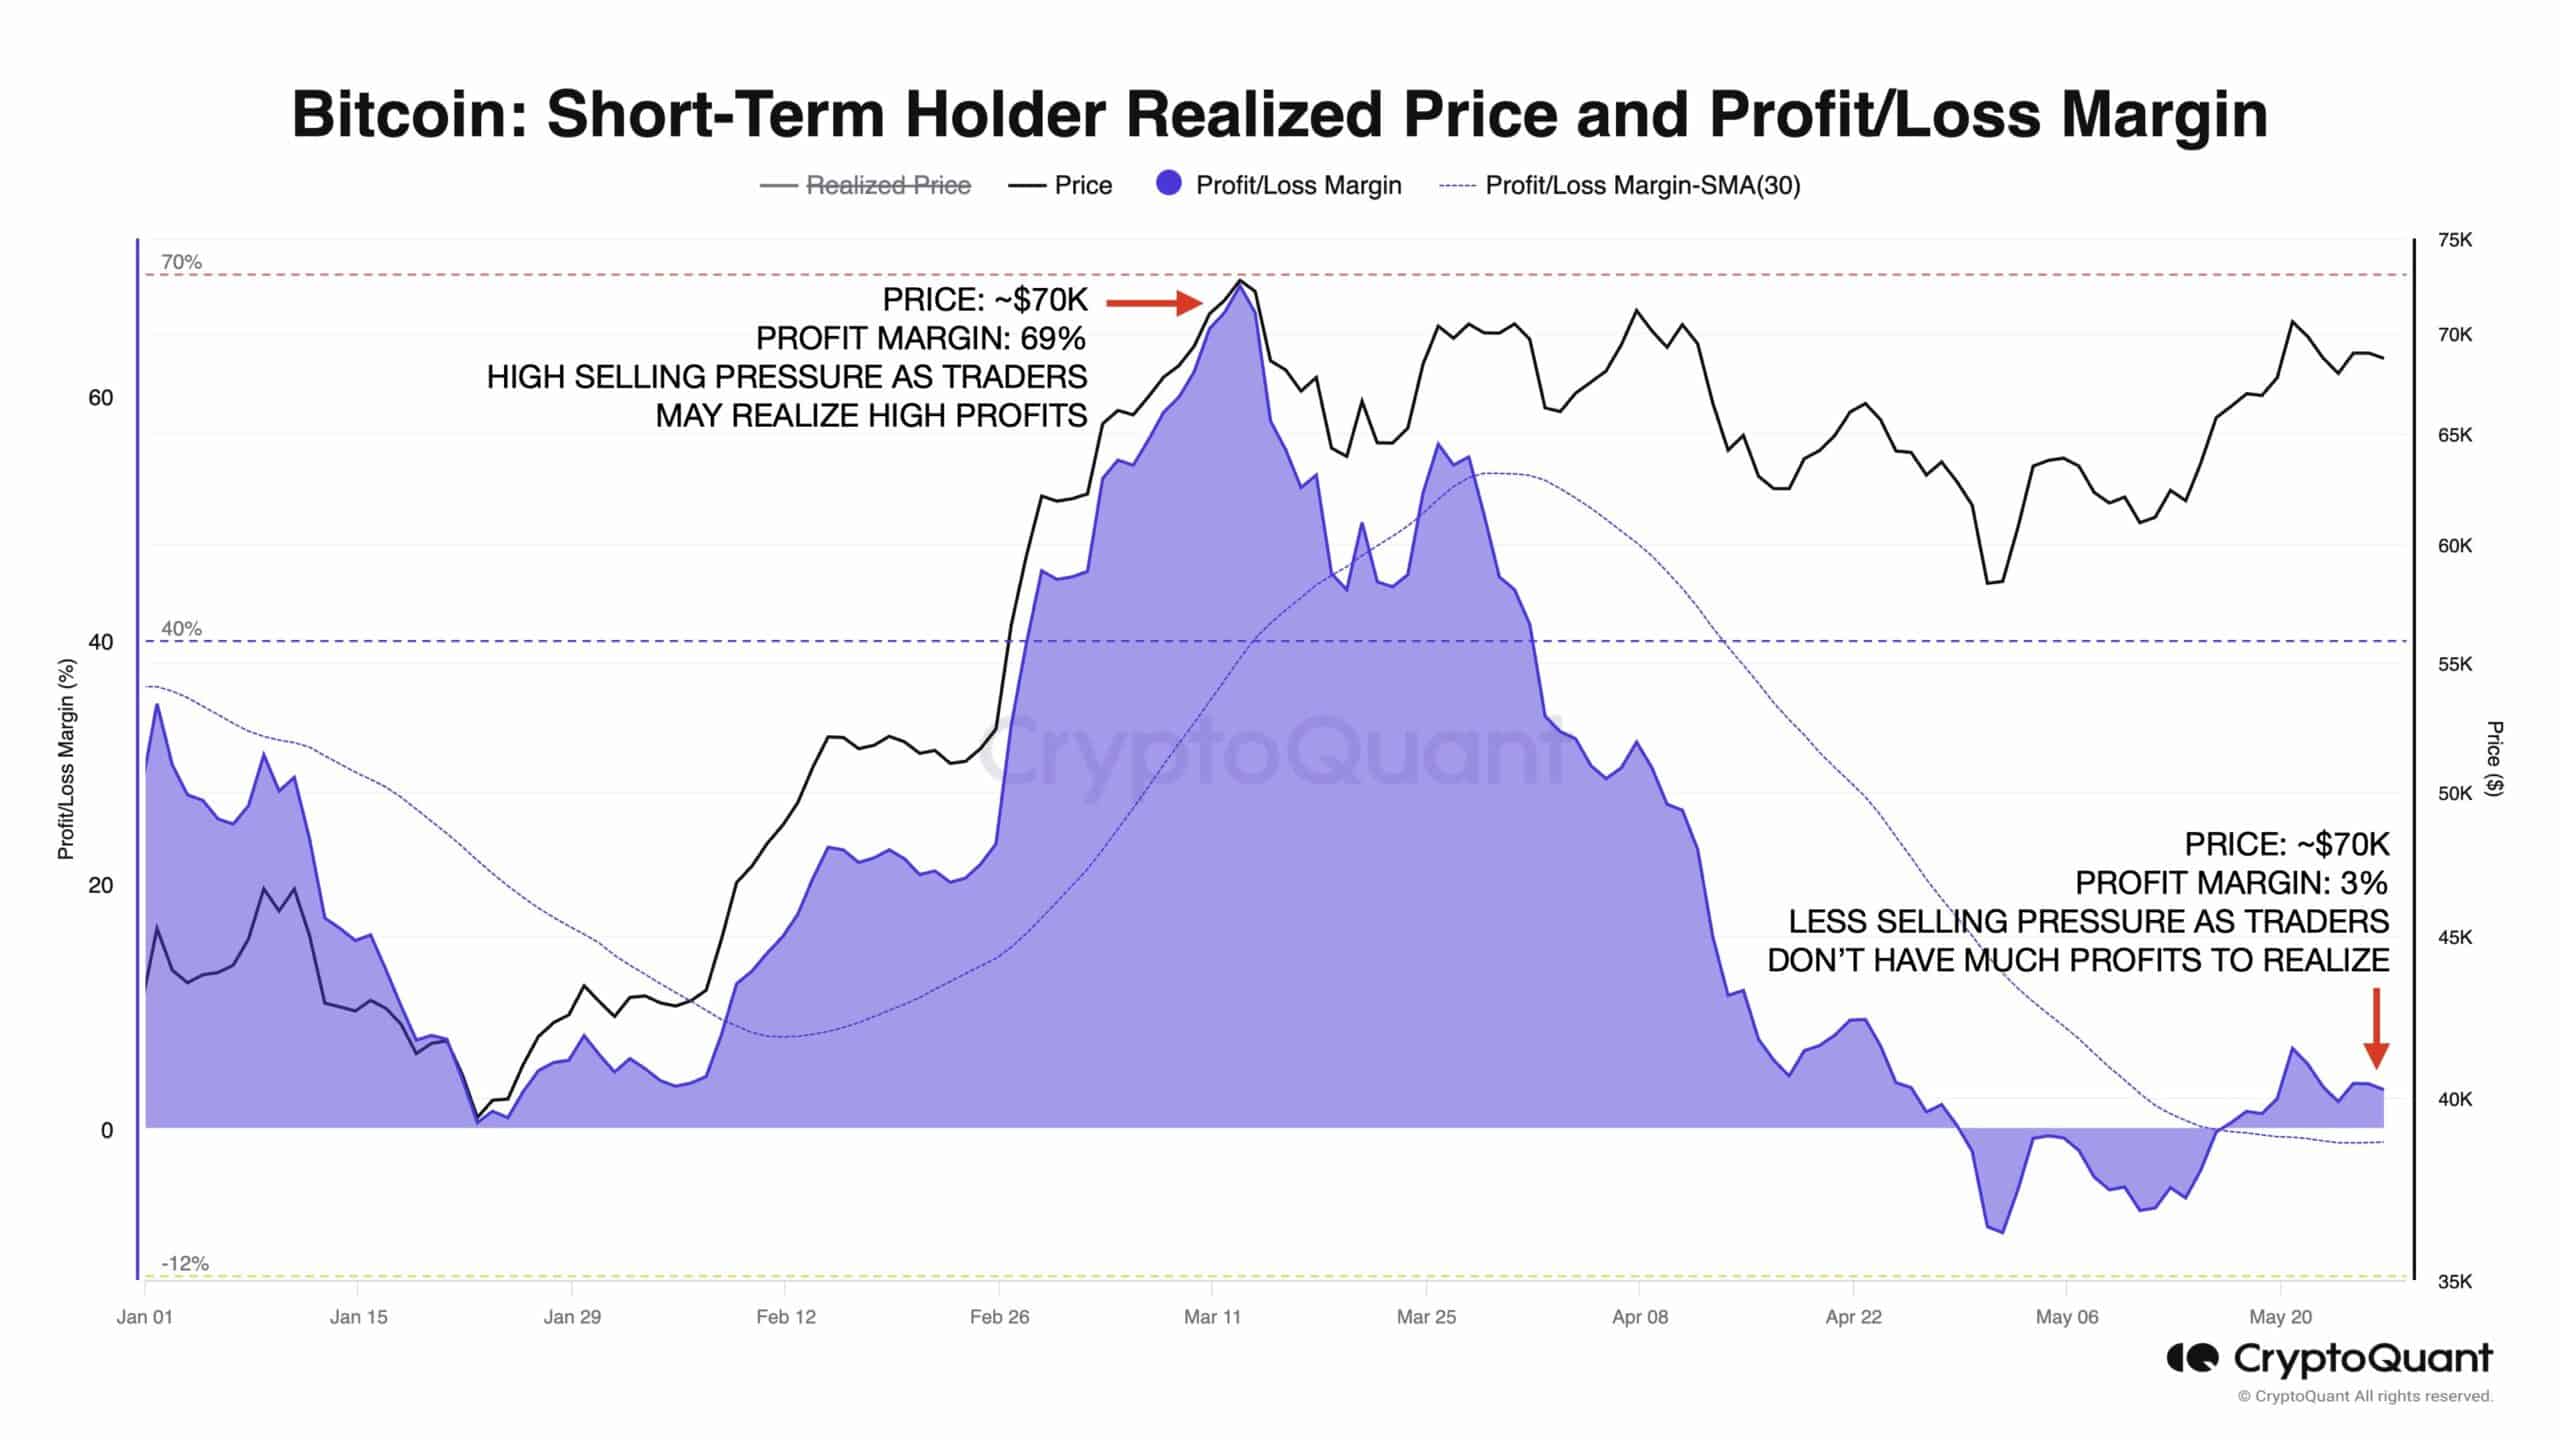 Bitcoin Profit/Loss Margin